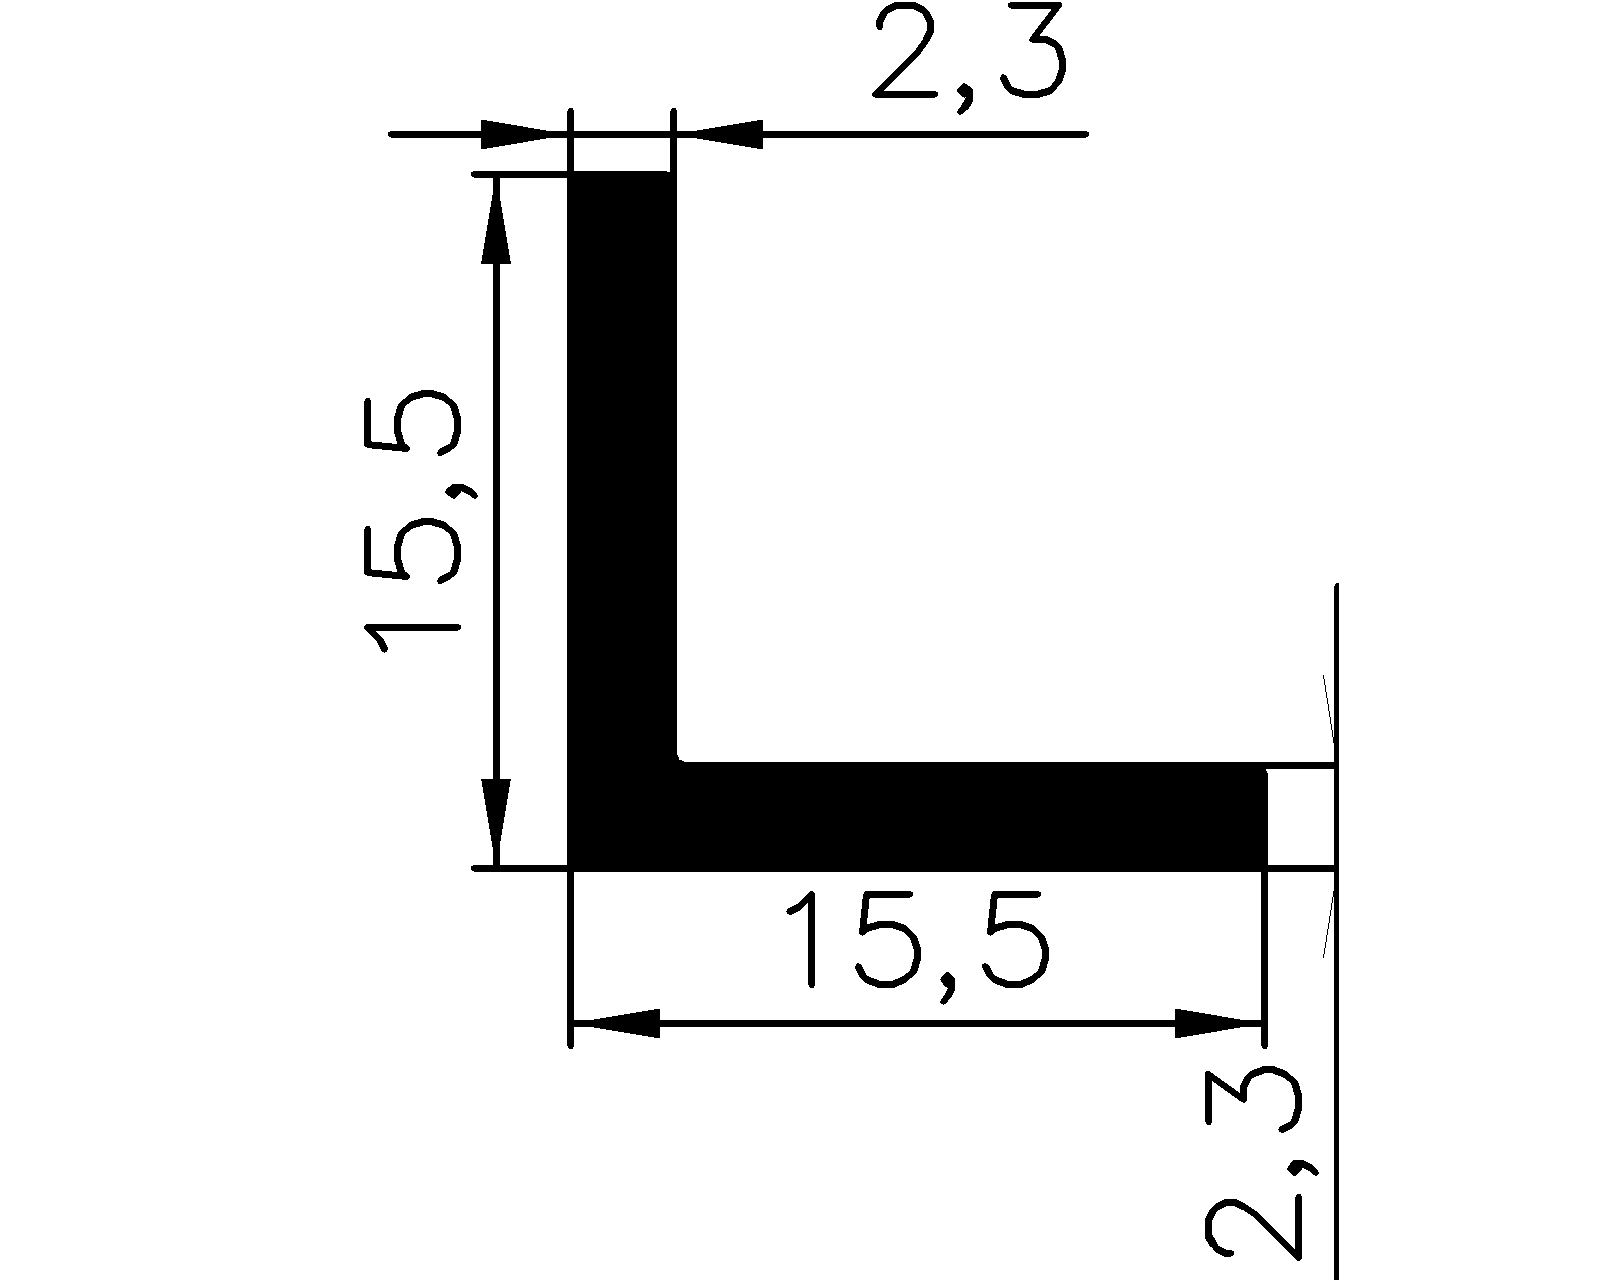 13110370KG - rubber profiles - Angle shape profiles